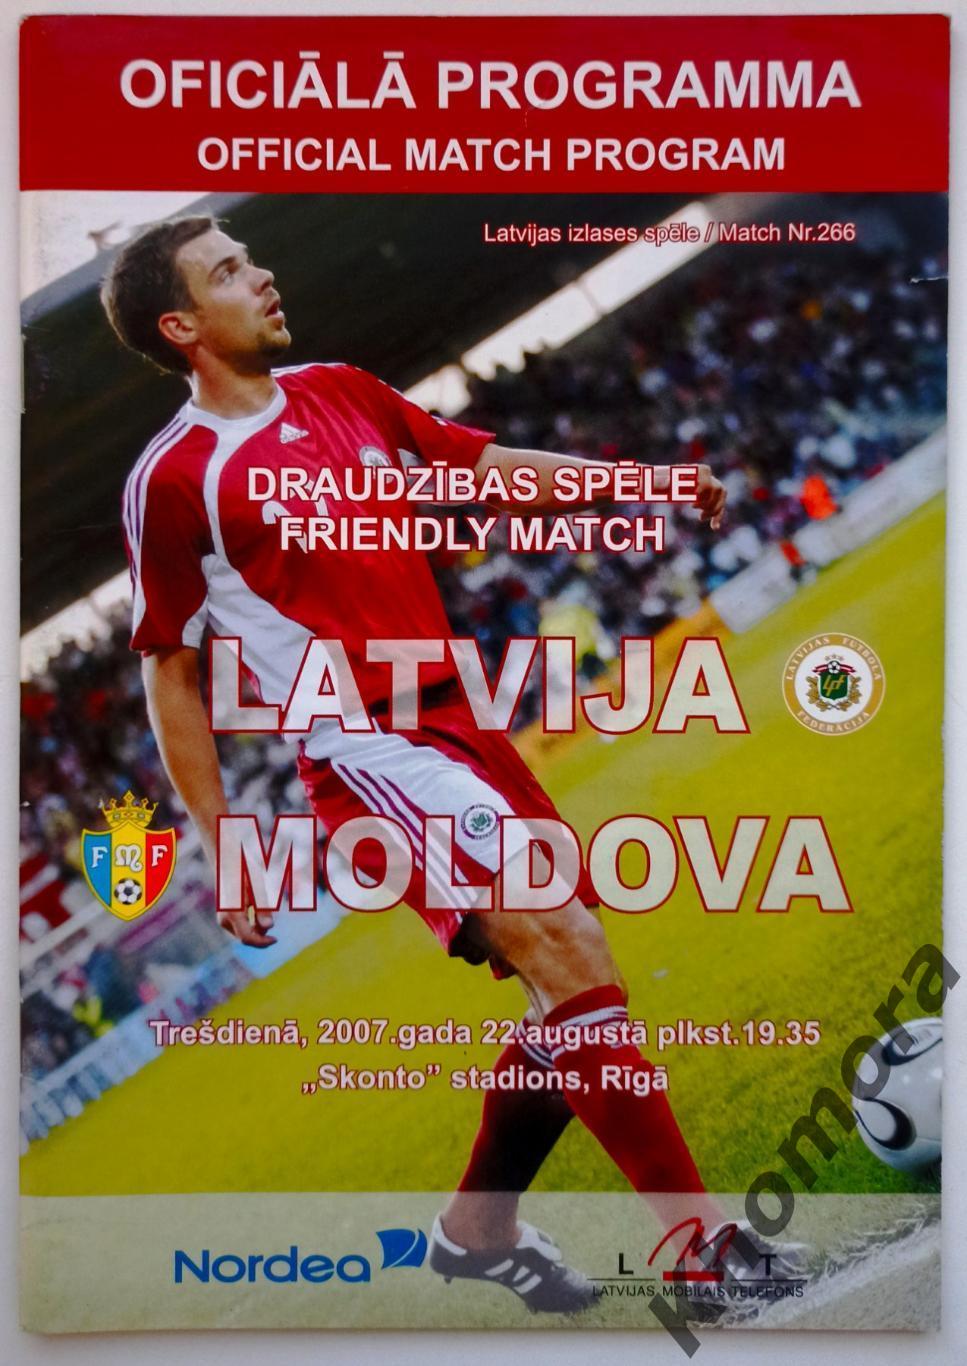 Латвия - Молдова 22.08.2007 - официальная программа